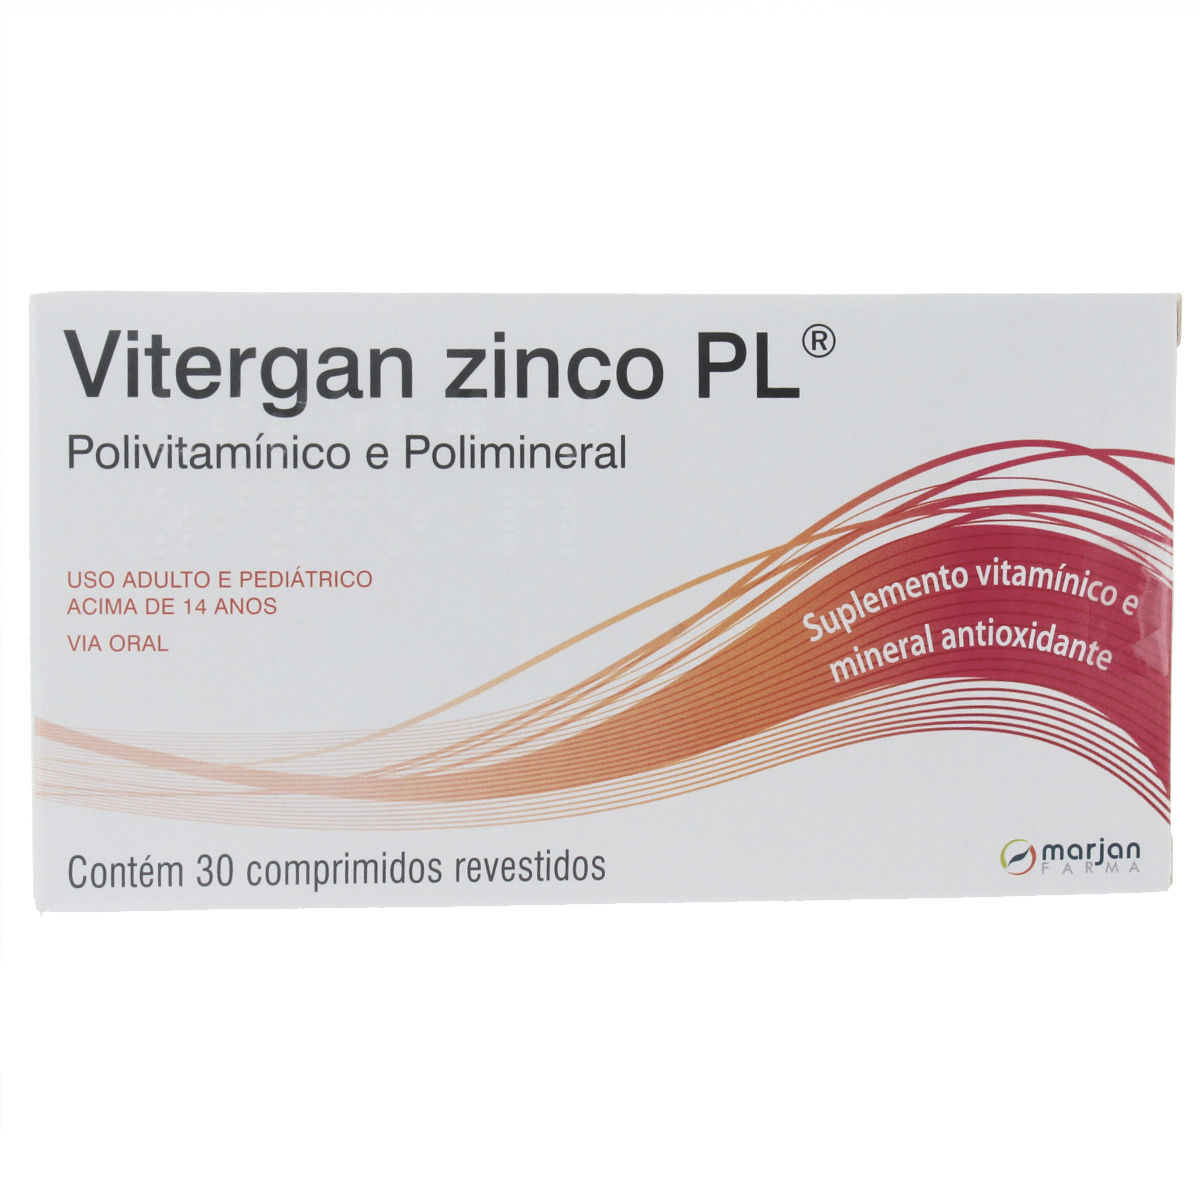 Suplemento Vitamínico e Mineral Vitergan Zinco PL - 30 Comprimidos